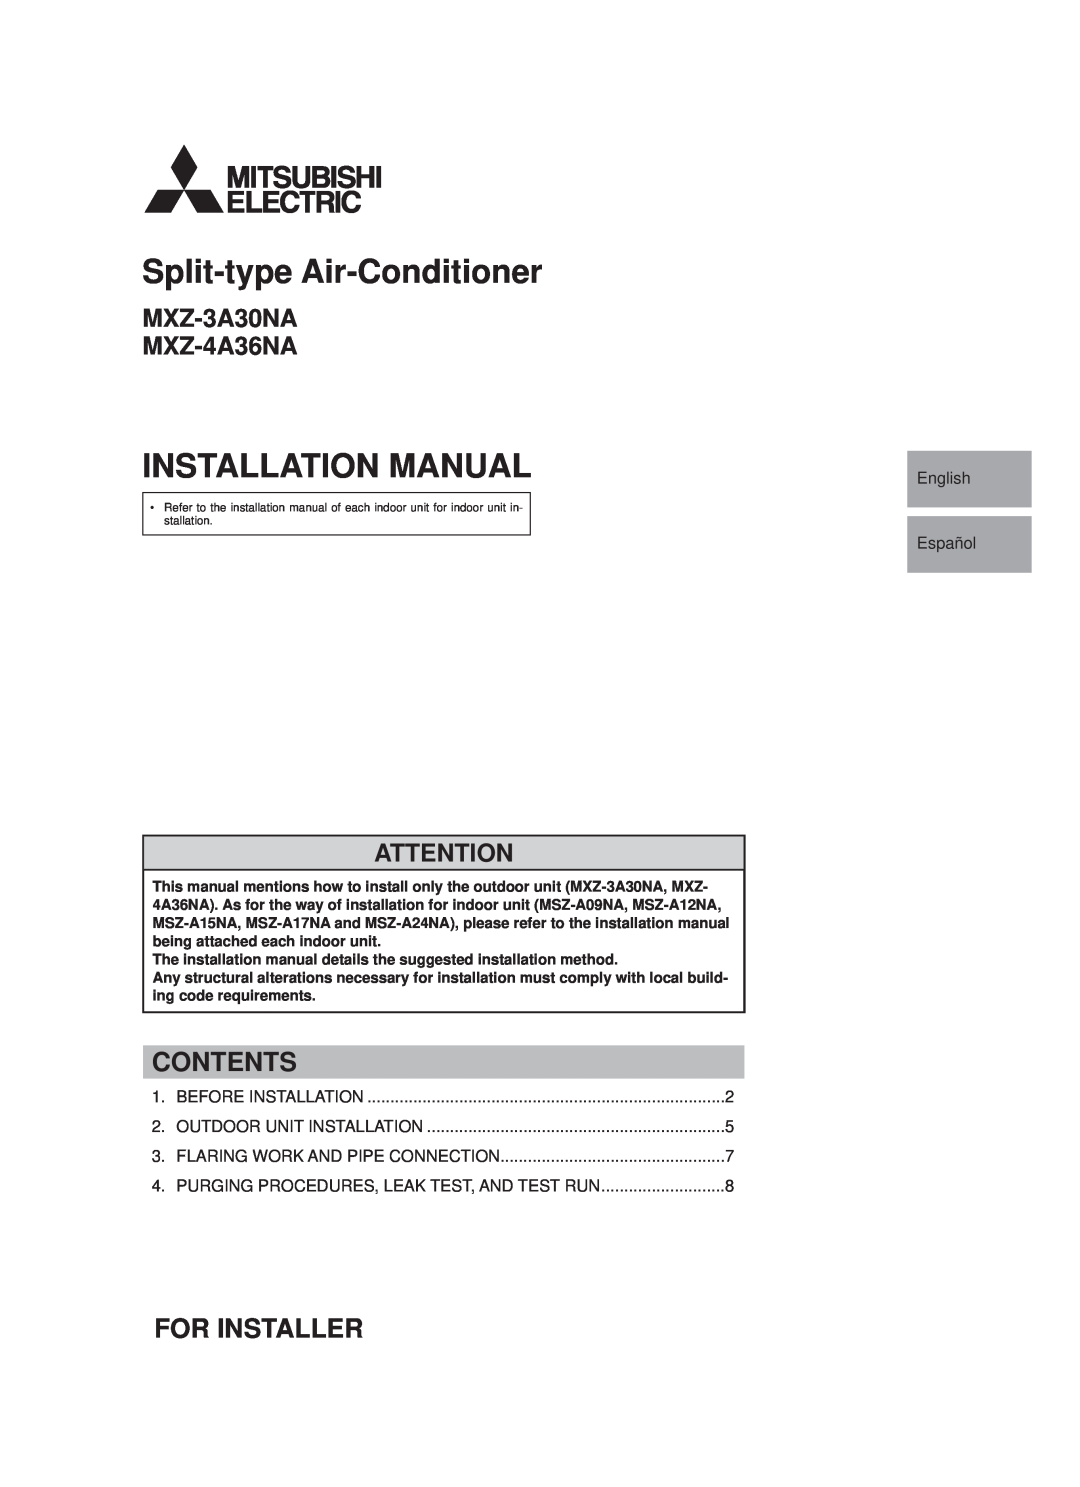 Troy-Bilt MXZ-4A36NA installation manual Split-type Air-Conditioner, Installation Manual, Contents, For Installer 